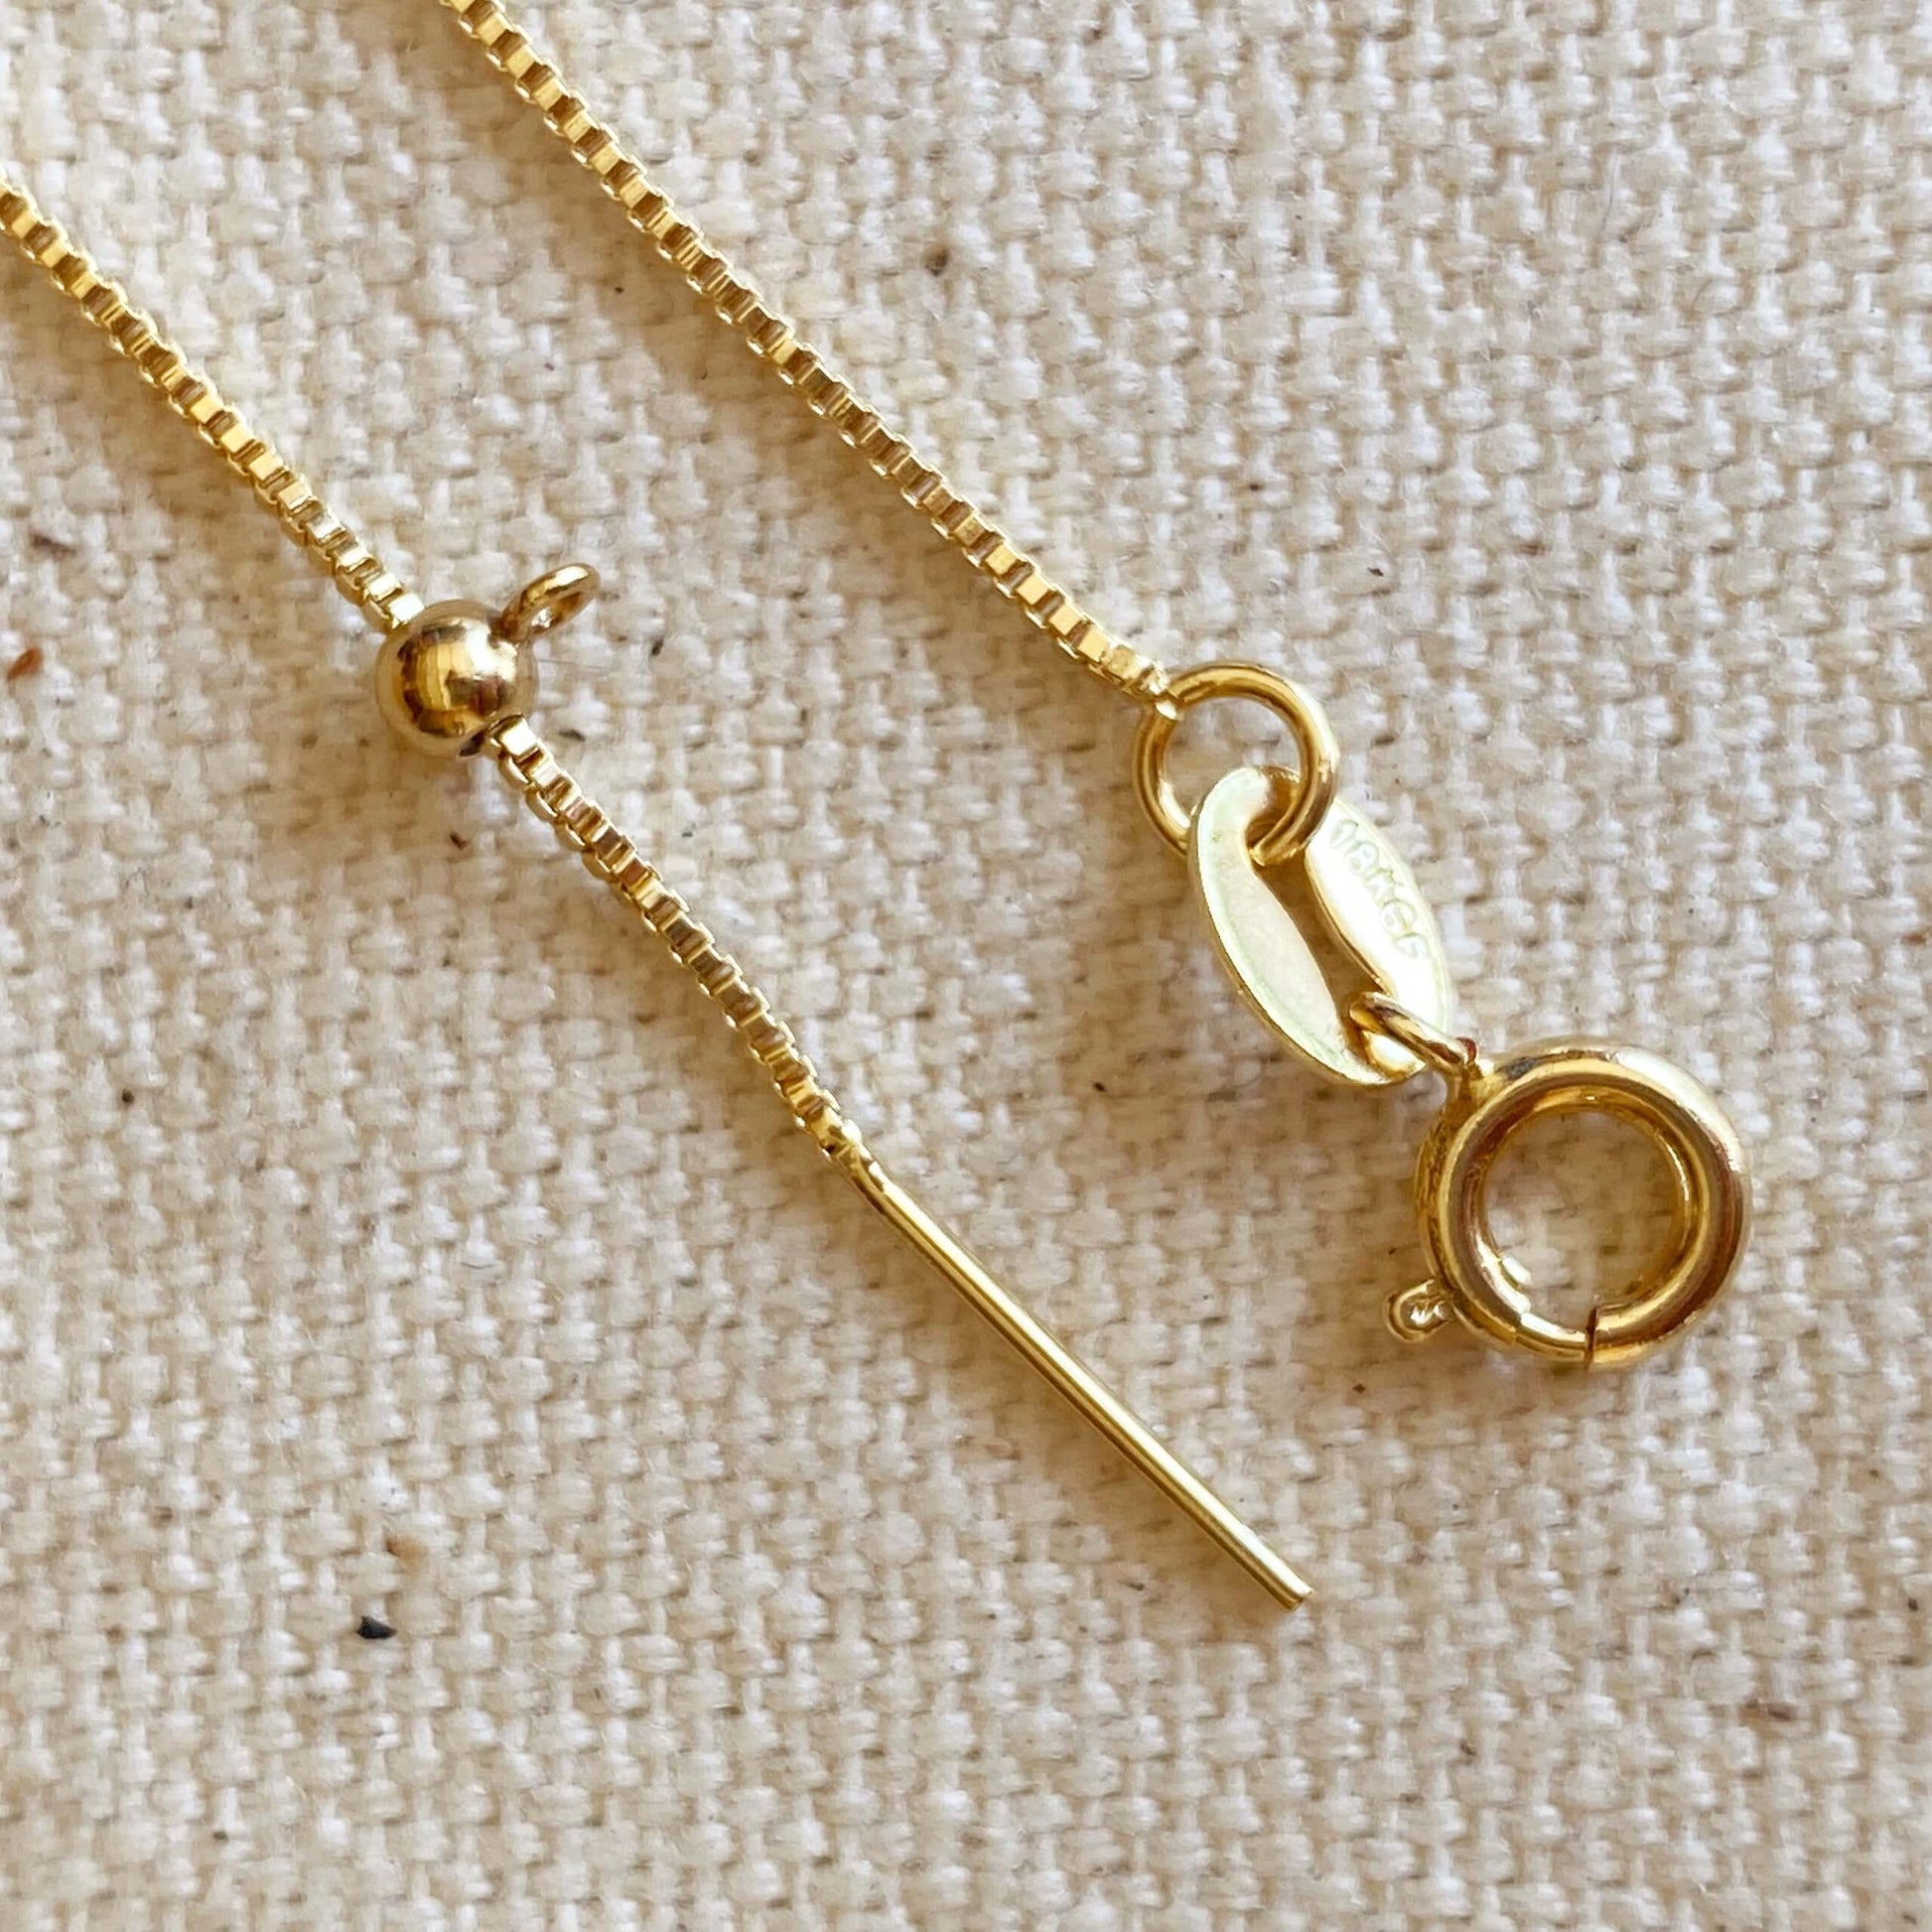 GoldFi 18k Gold Filled Adjustable Sizing Necklace